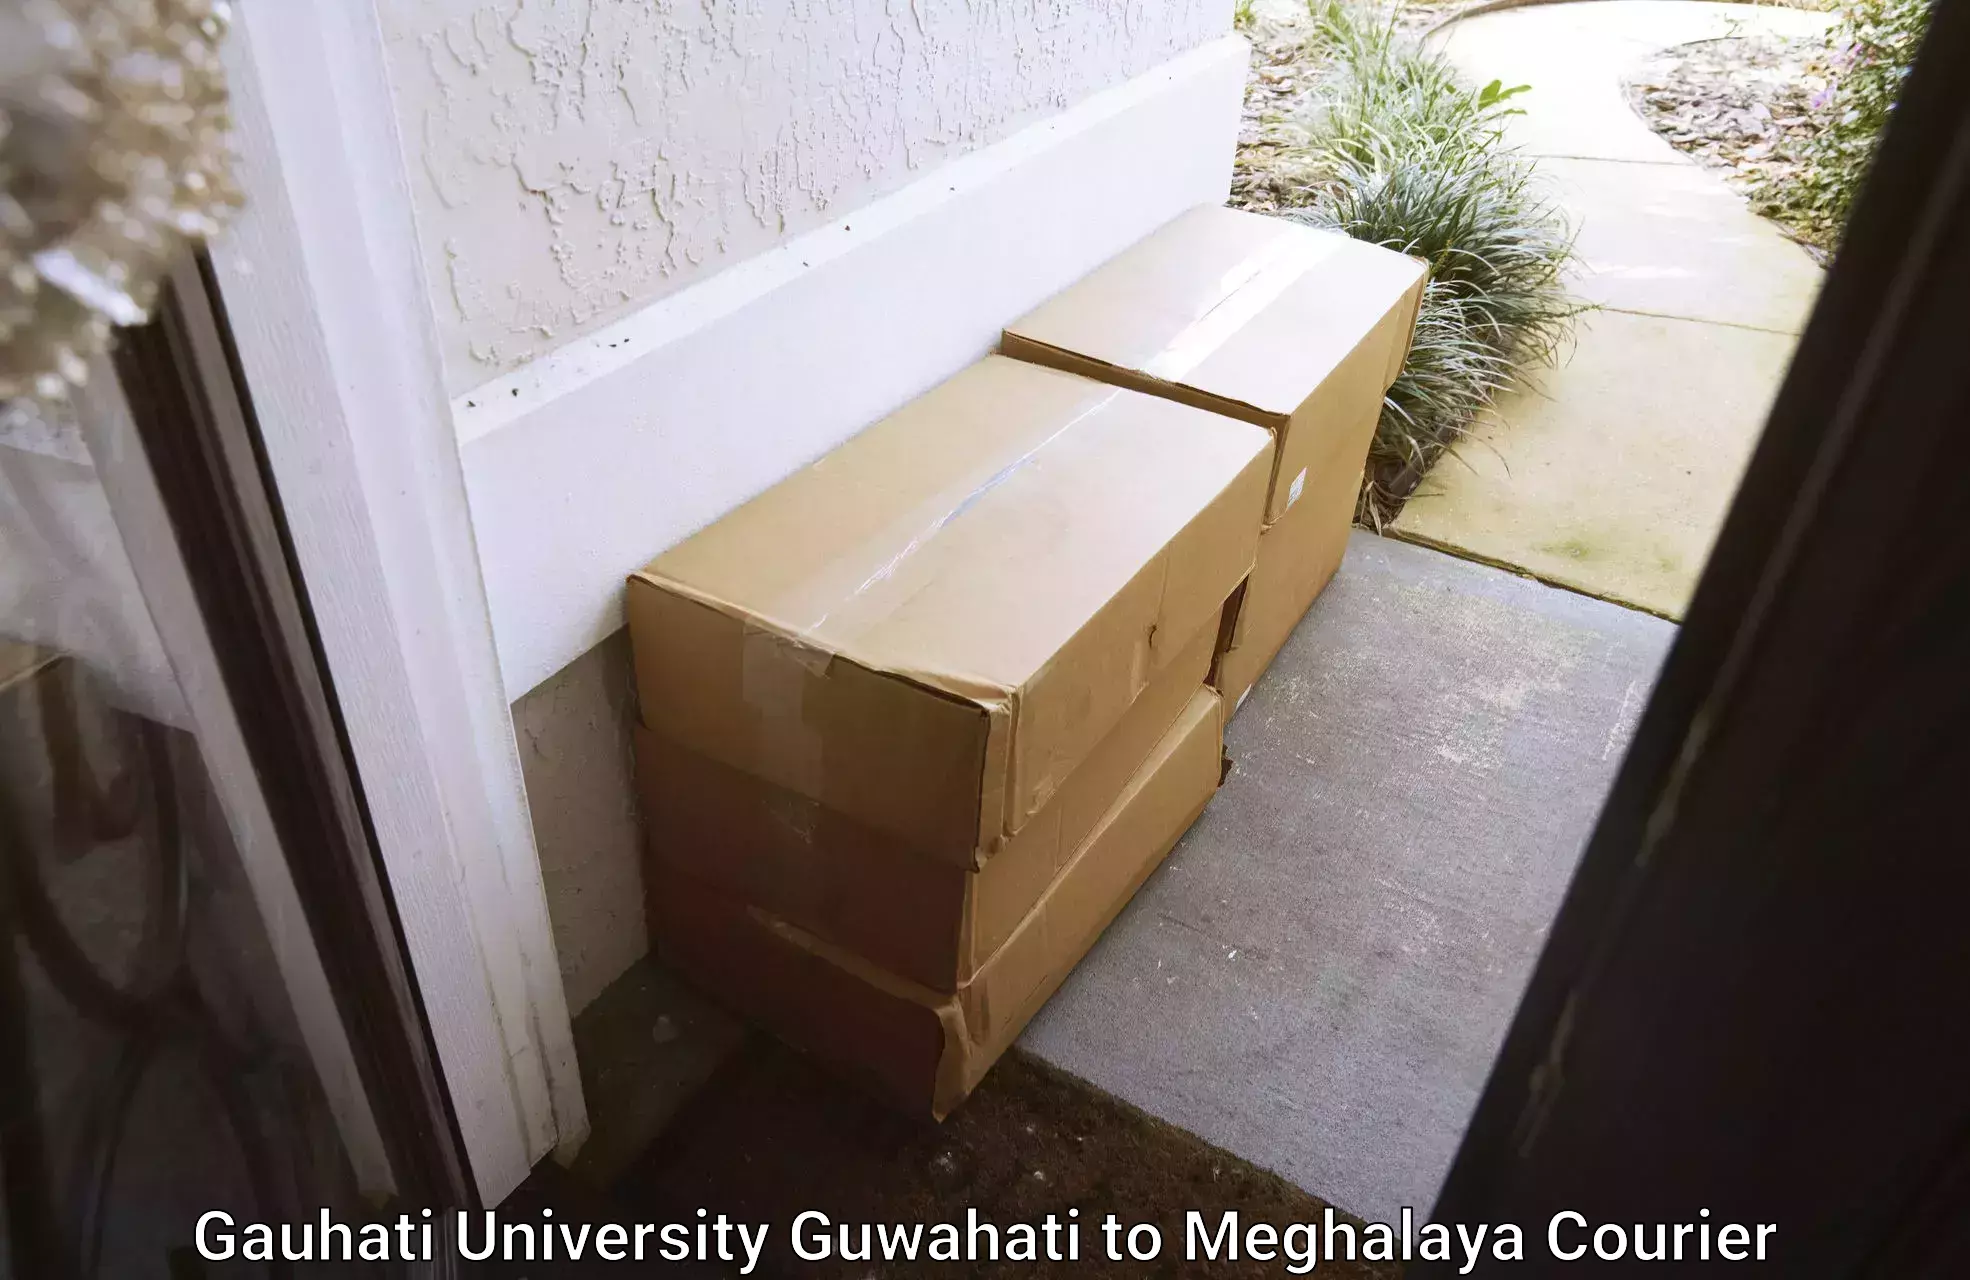 Professional courier handling Gauhati University Guwahati to Williamnagar